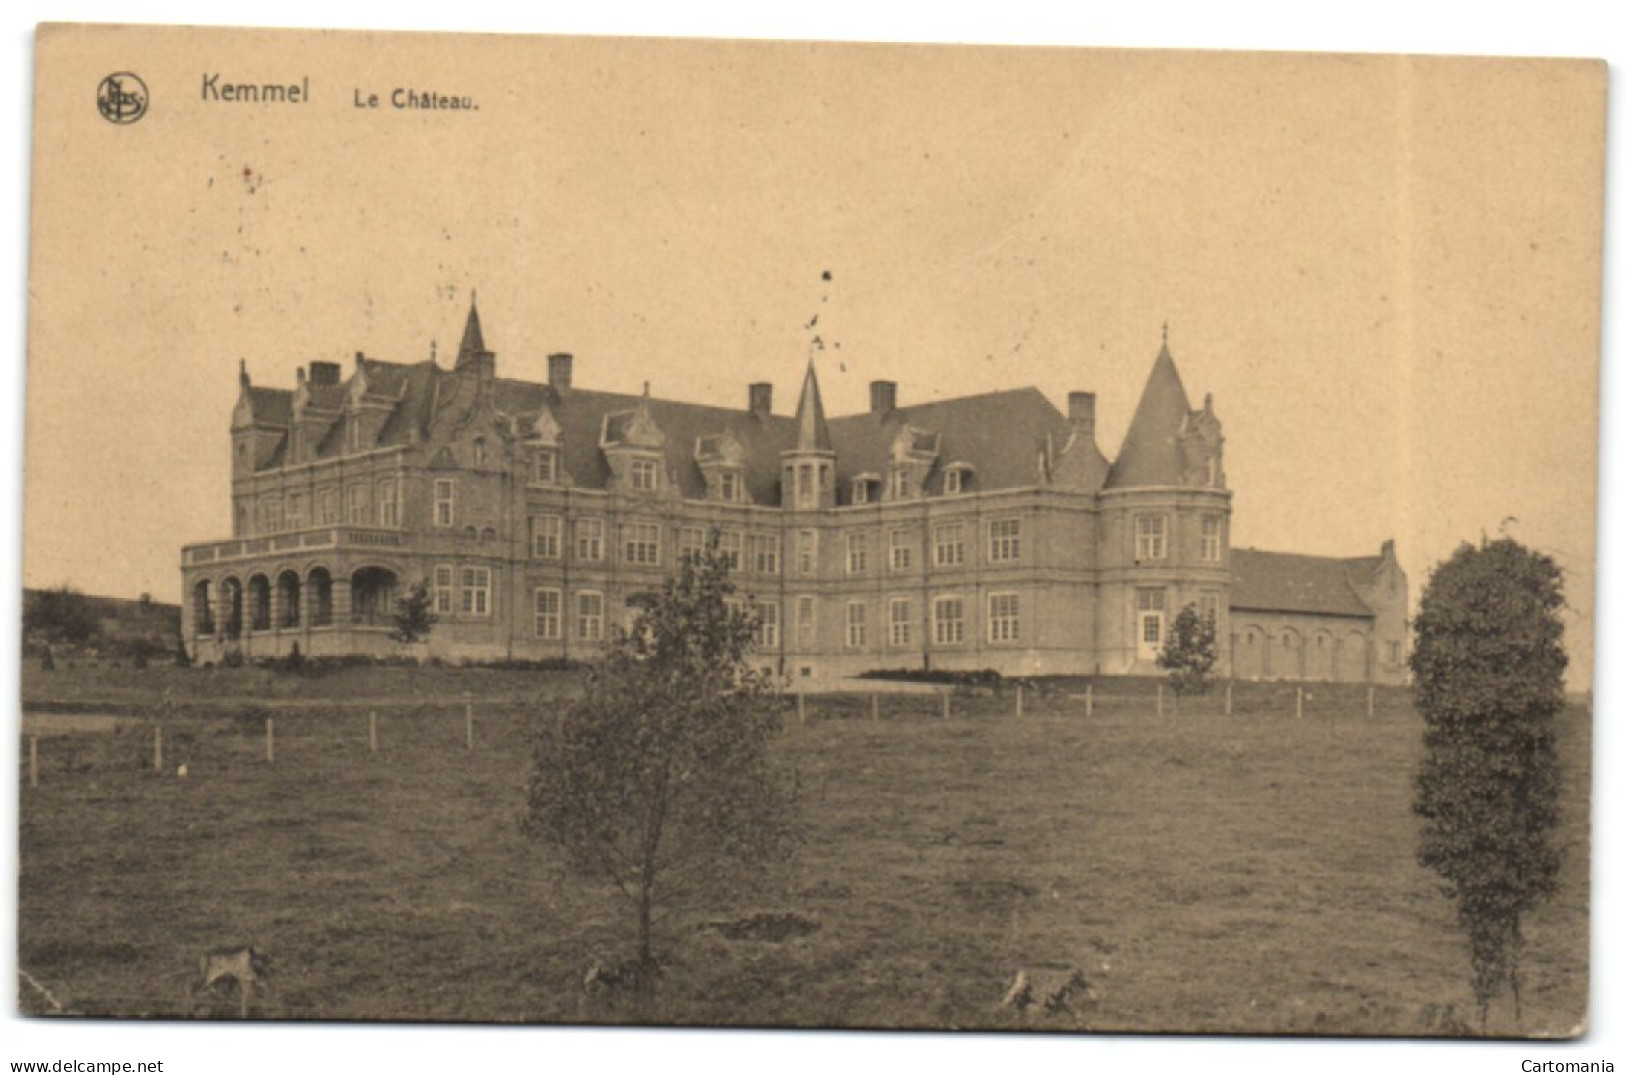 Kemmel - Le Château - Hooglede